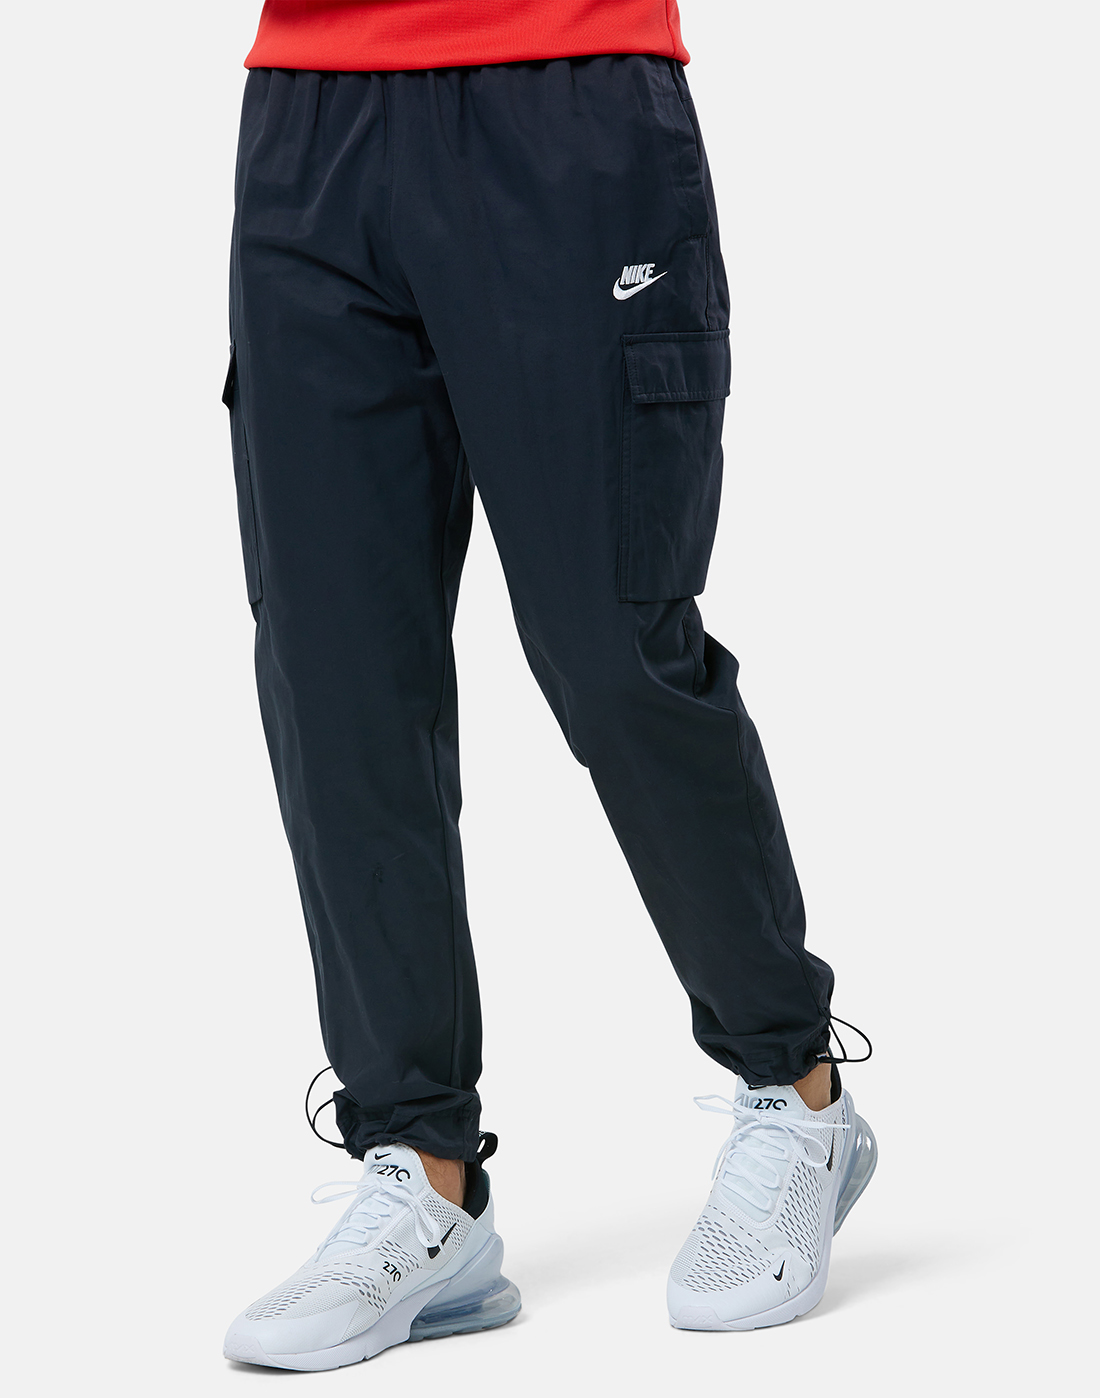 Nike Mens Woven Cargo Pants - Black | Life Style Sports UK